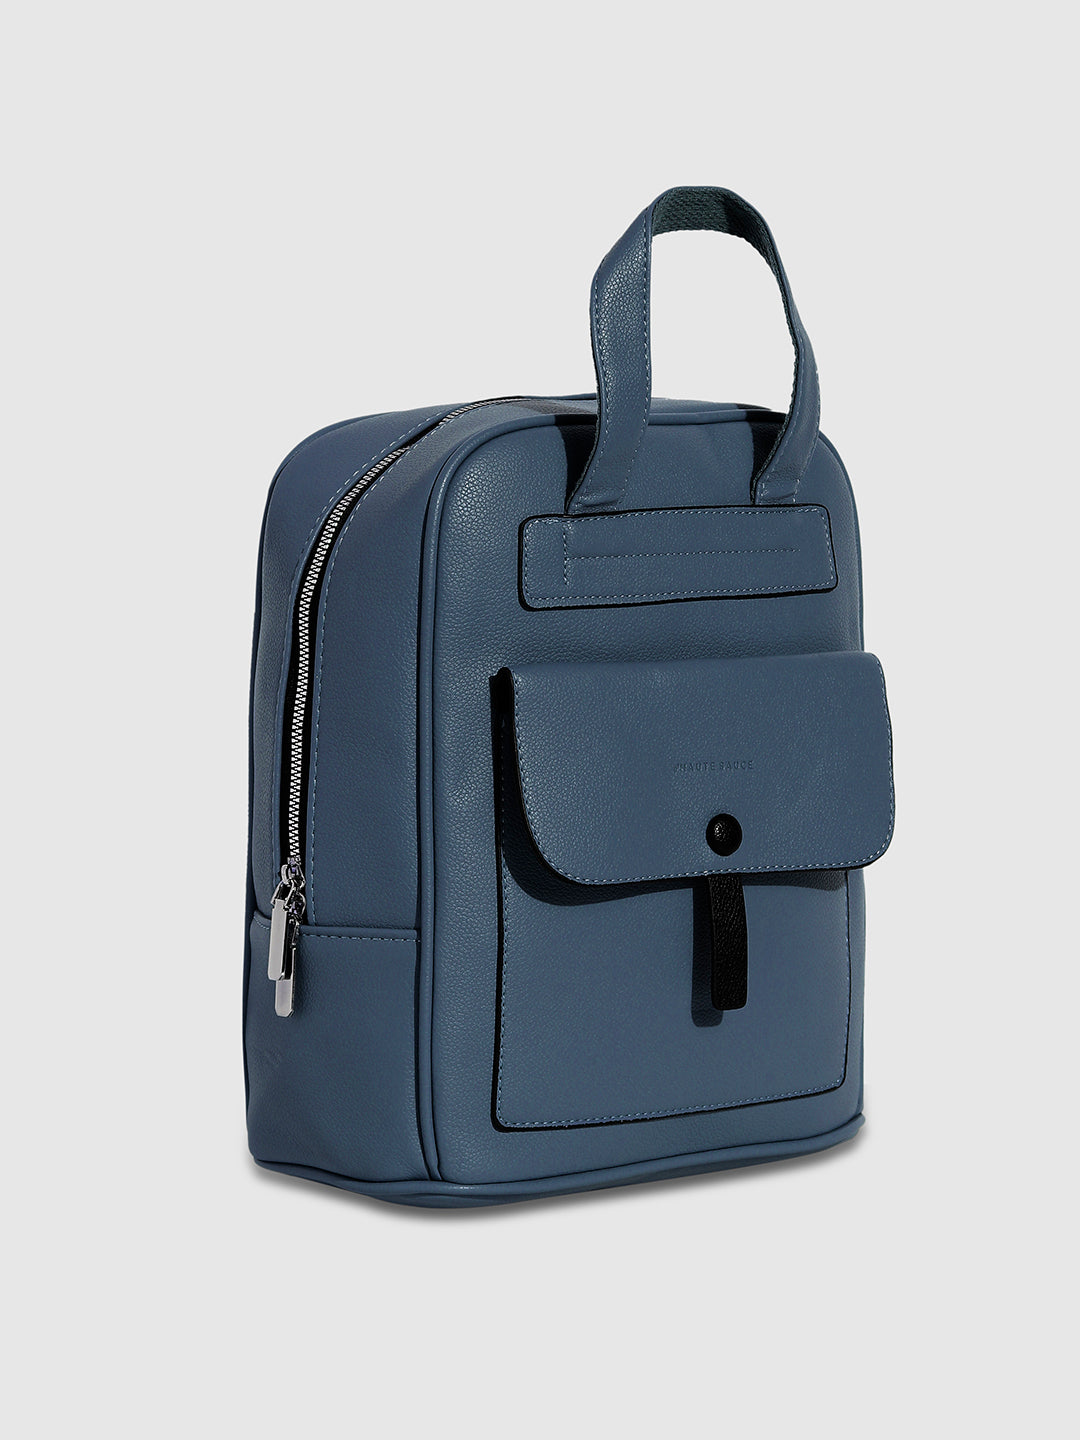 Top Handle Backpack - Indigo Blue